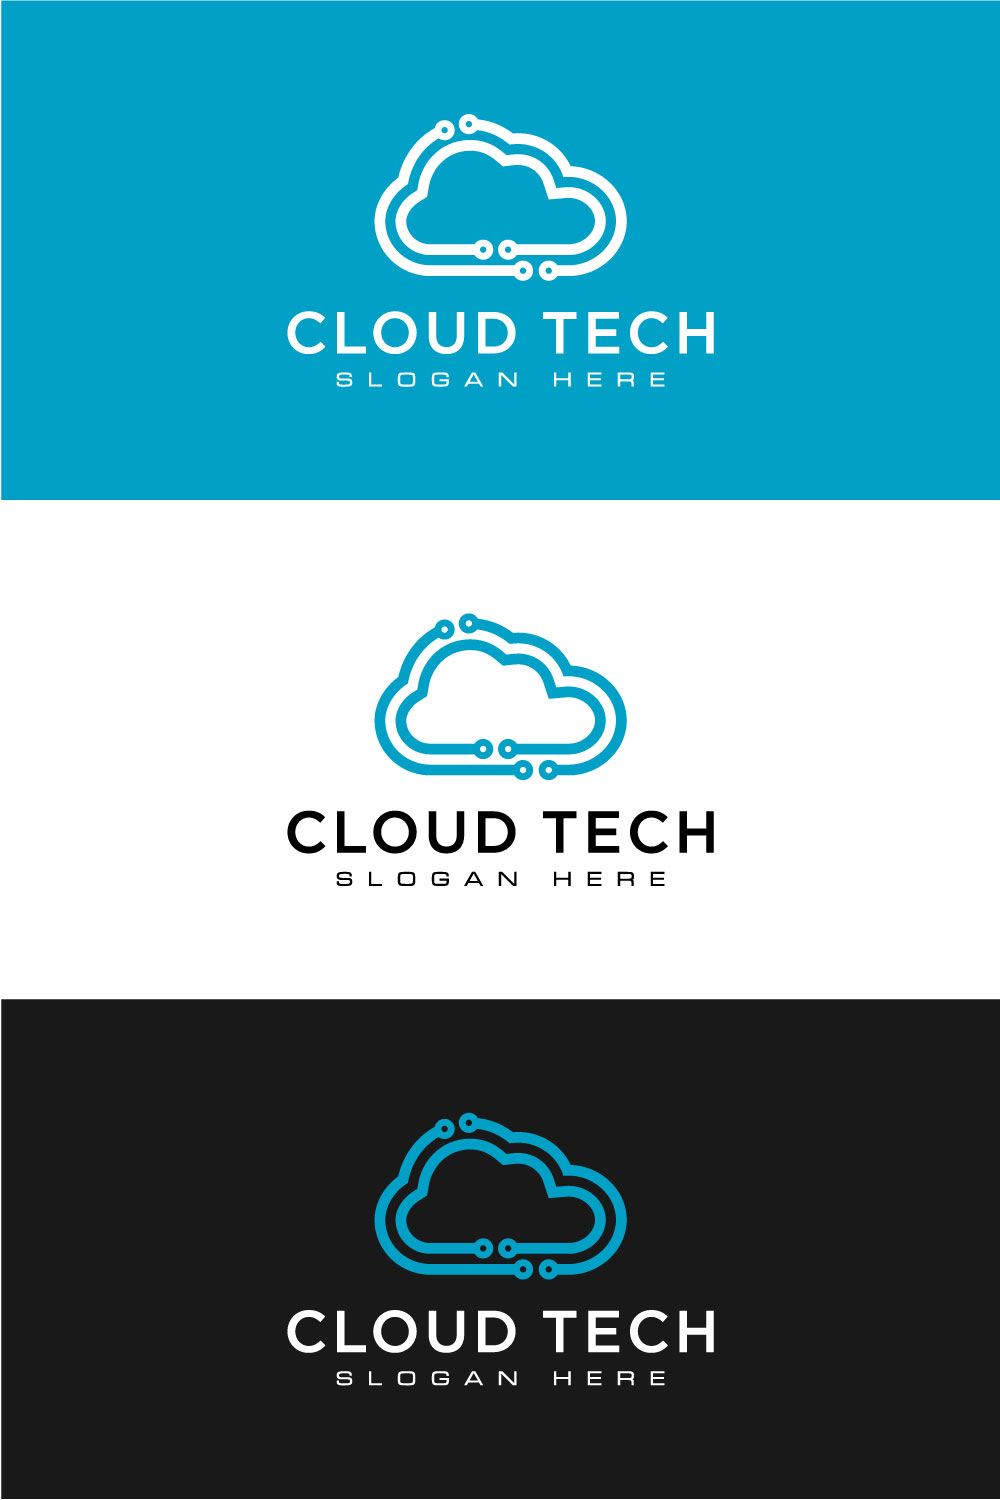 Cloud Technology Vector Template Design Pinterest Image.